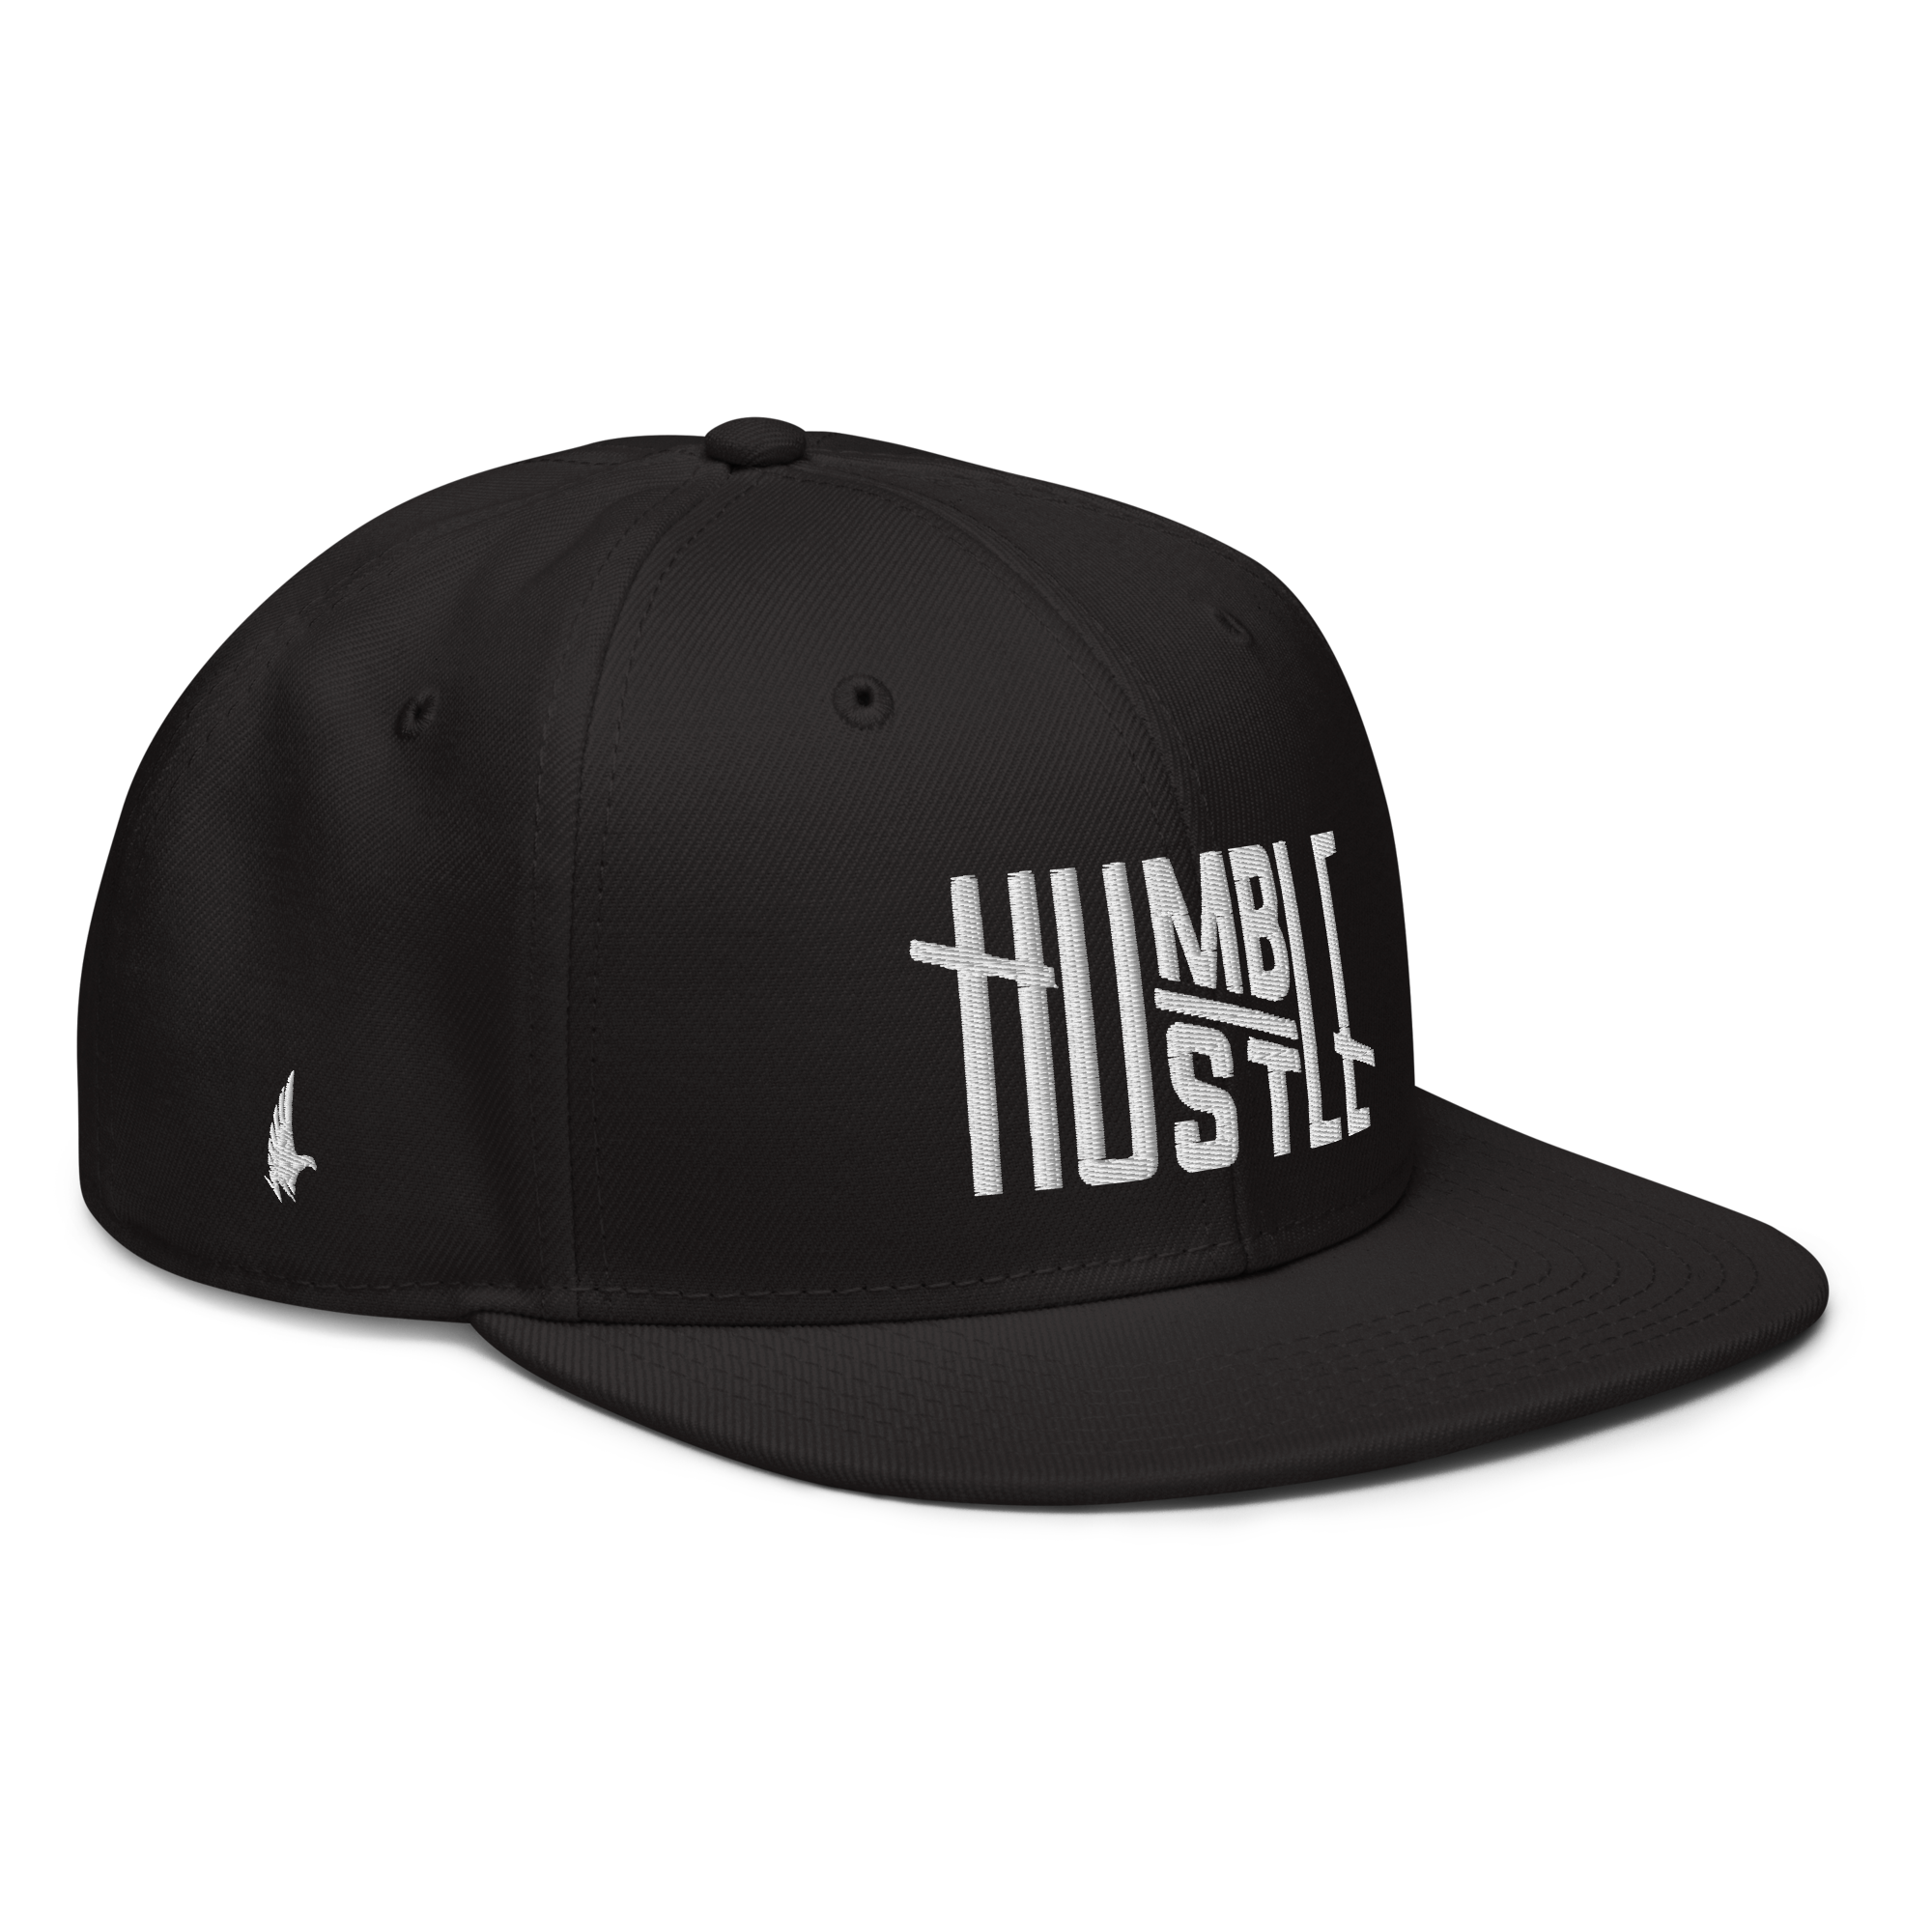 Humble Hustle Snapback Hat Black/White OS - Loyalty Vibes